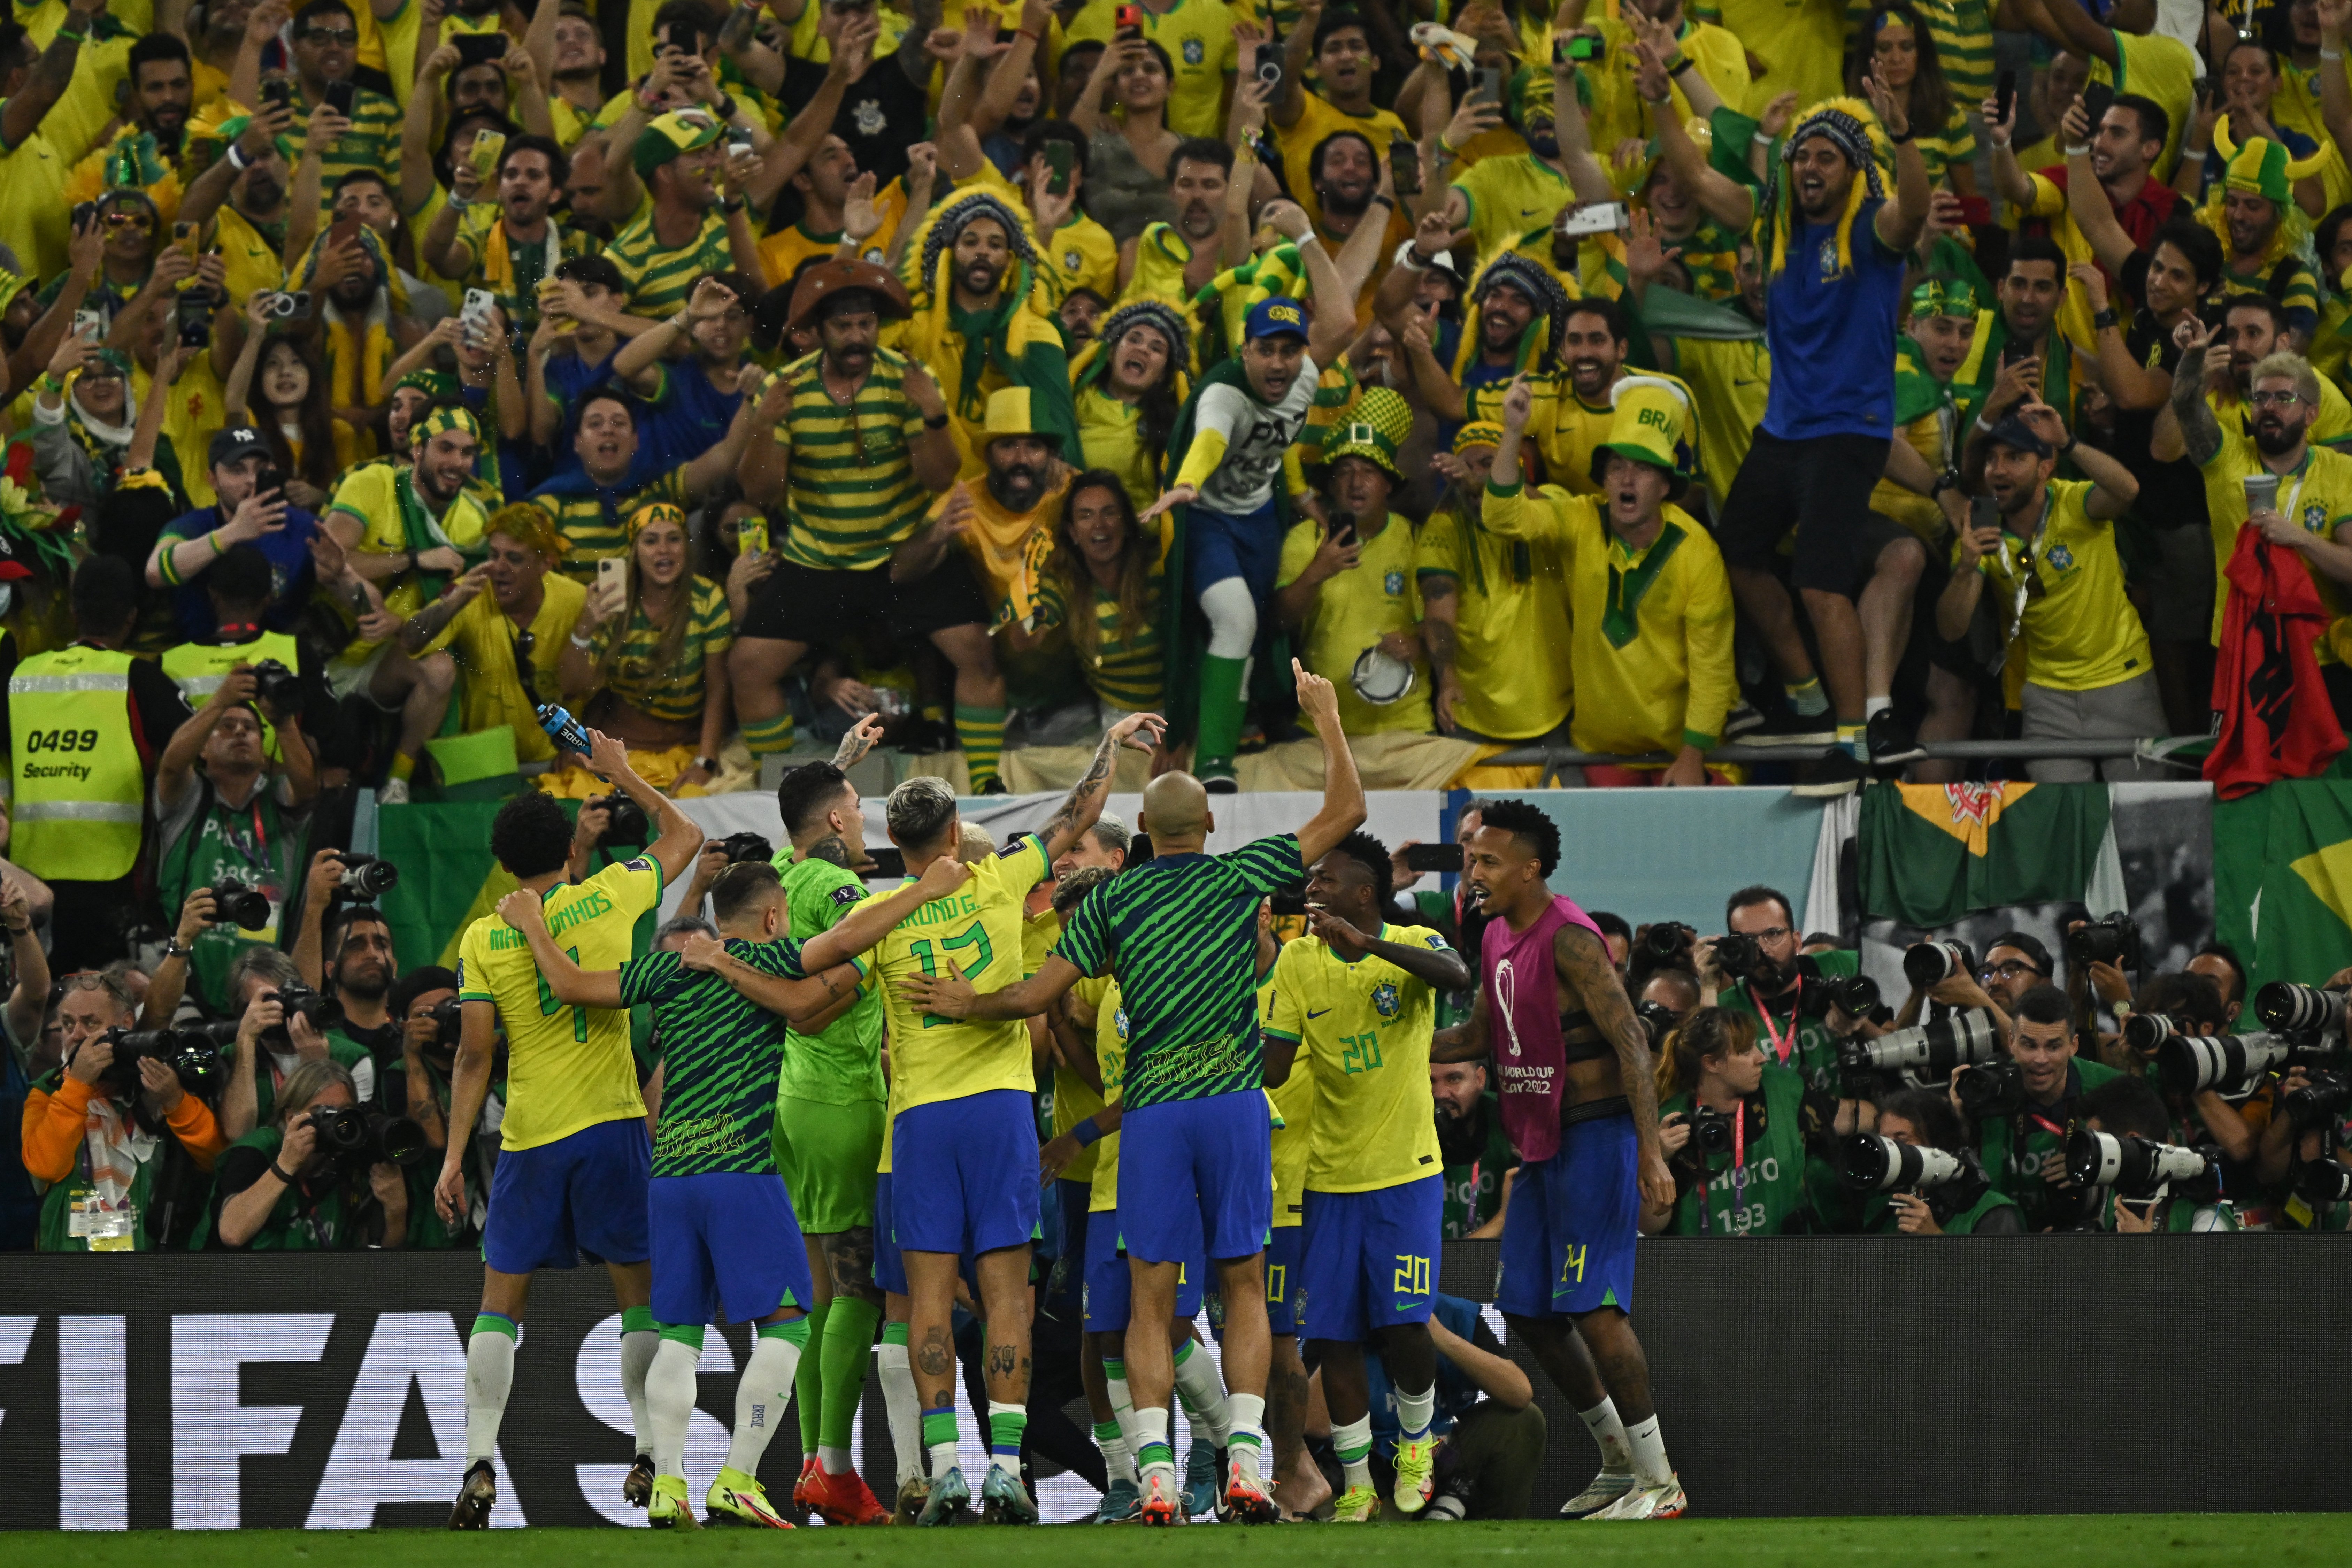 O despertar internacional do futebol brasileiro